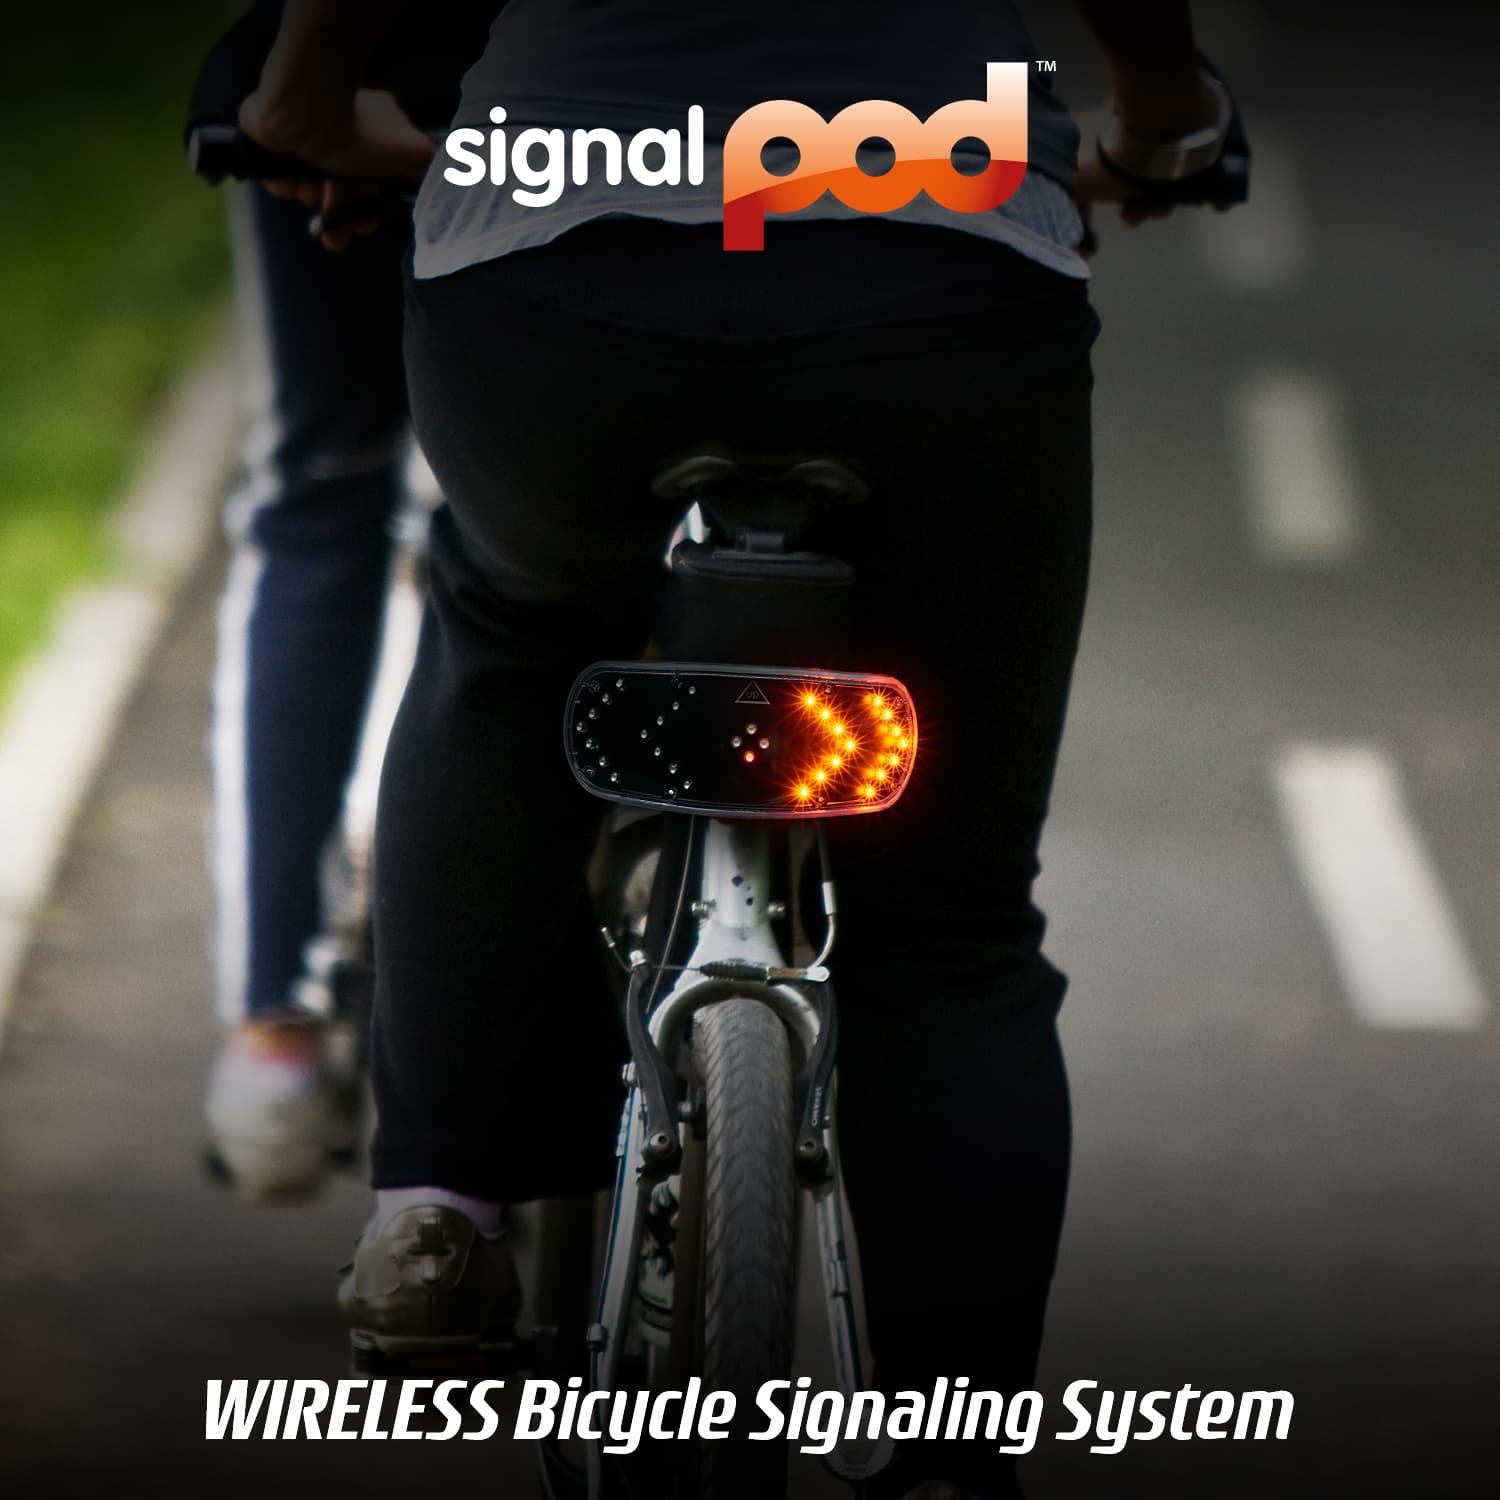 IGGI Signal Pod - Blinkersystem für's Fahrrad